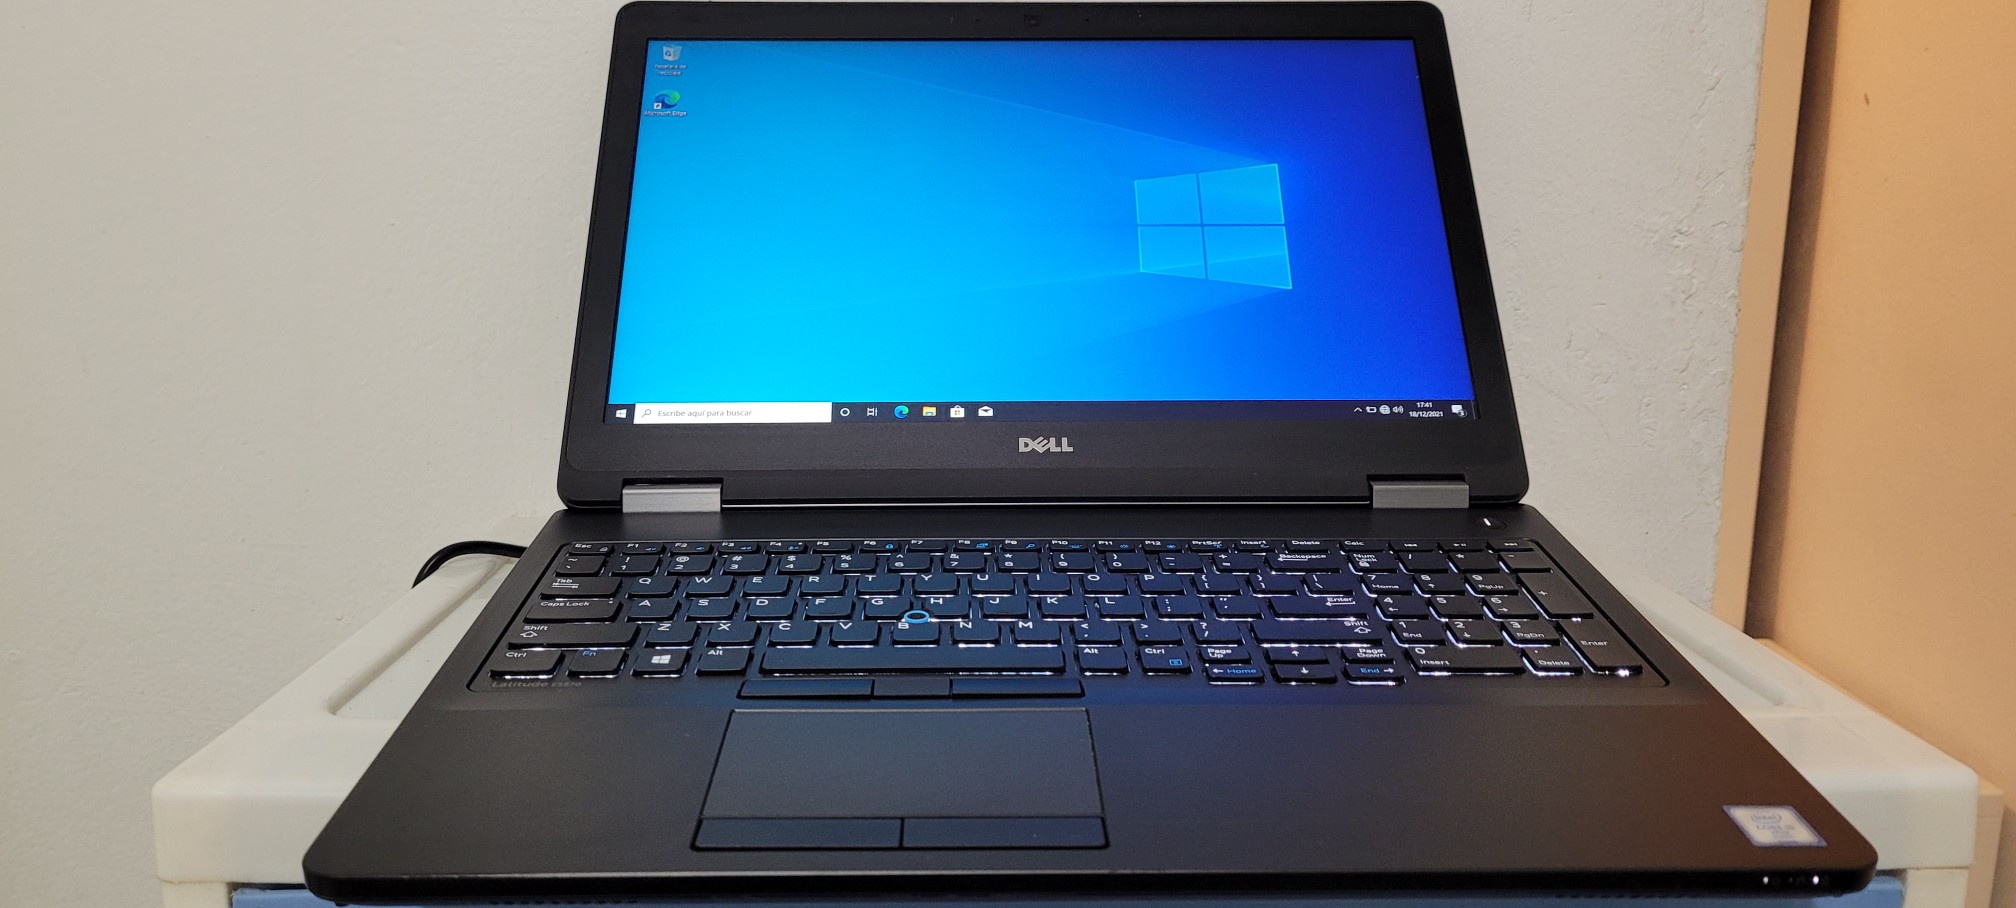 computadoras y laptops - Laptop Dell 17 Pulg Core i7 2.7ghz Ram 8gb Disco 1000gb Video 6gb